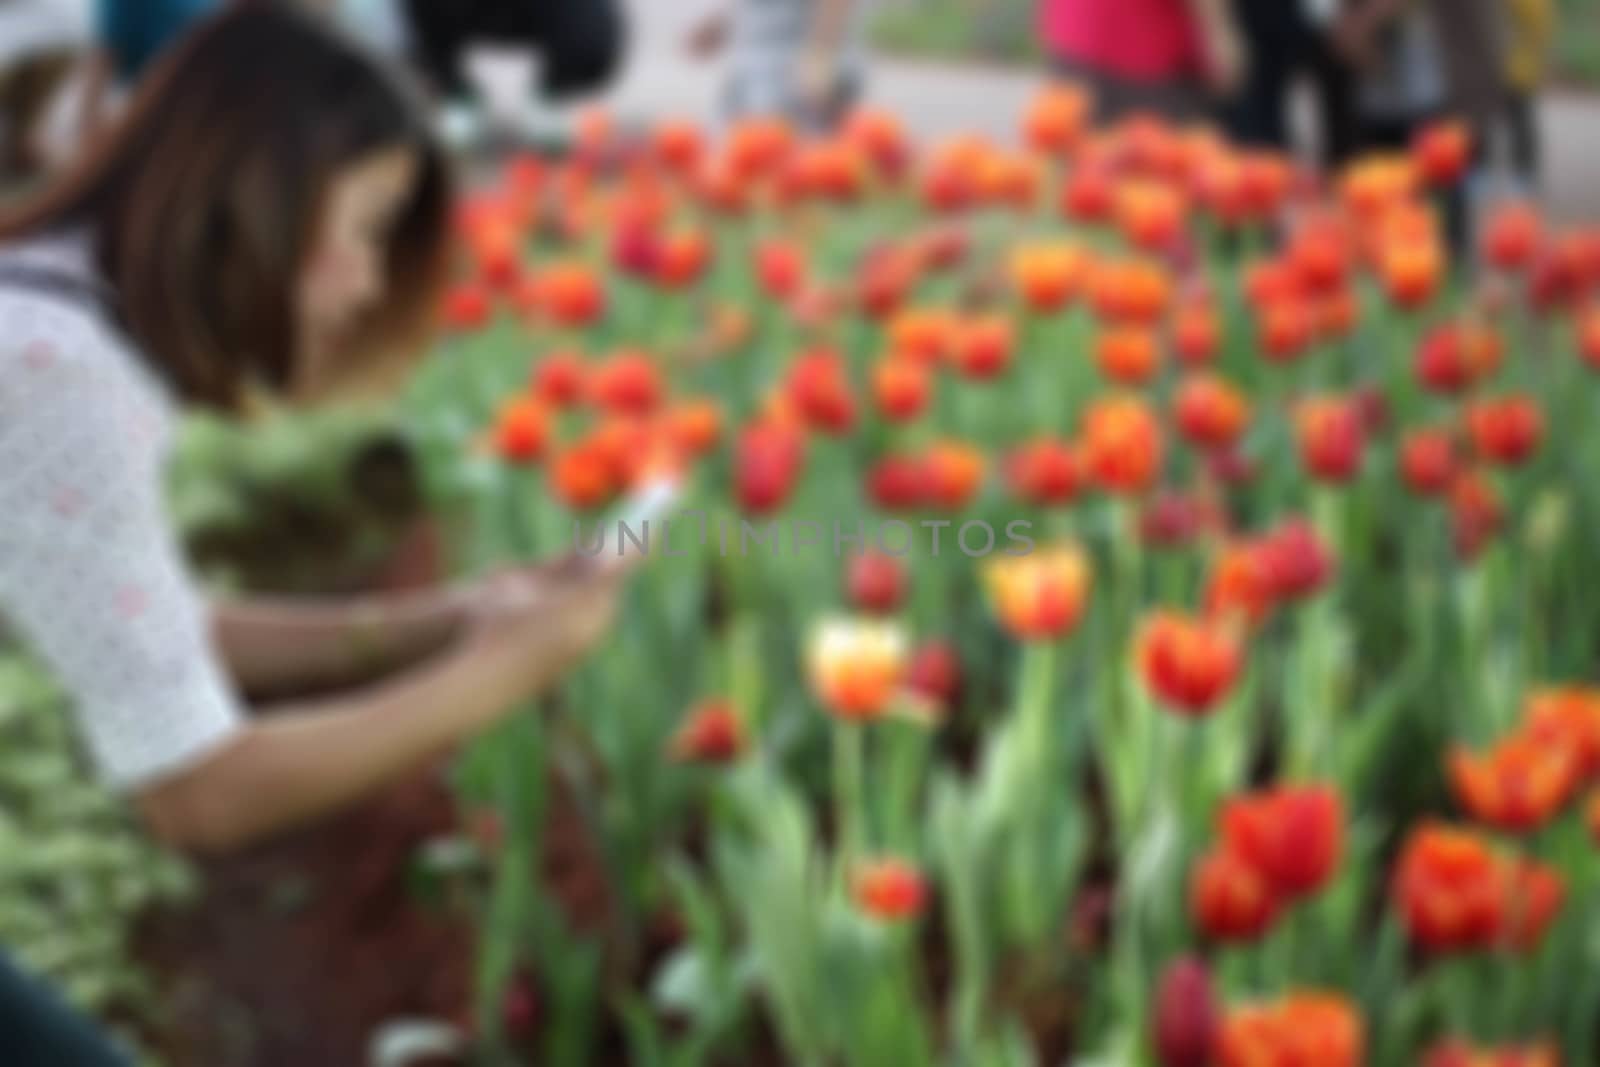 Women bow photo tulips blurred.